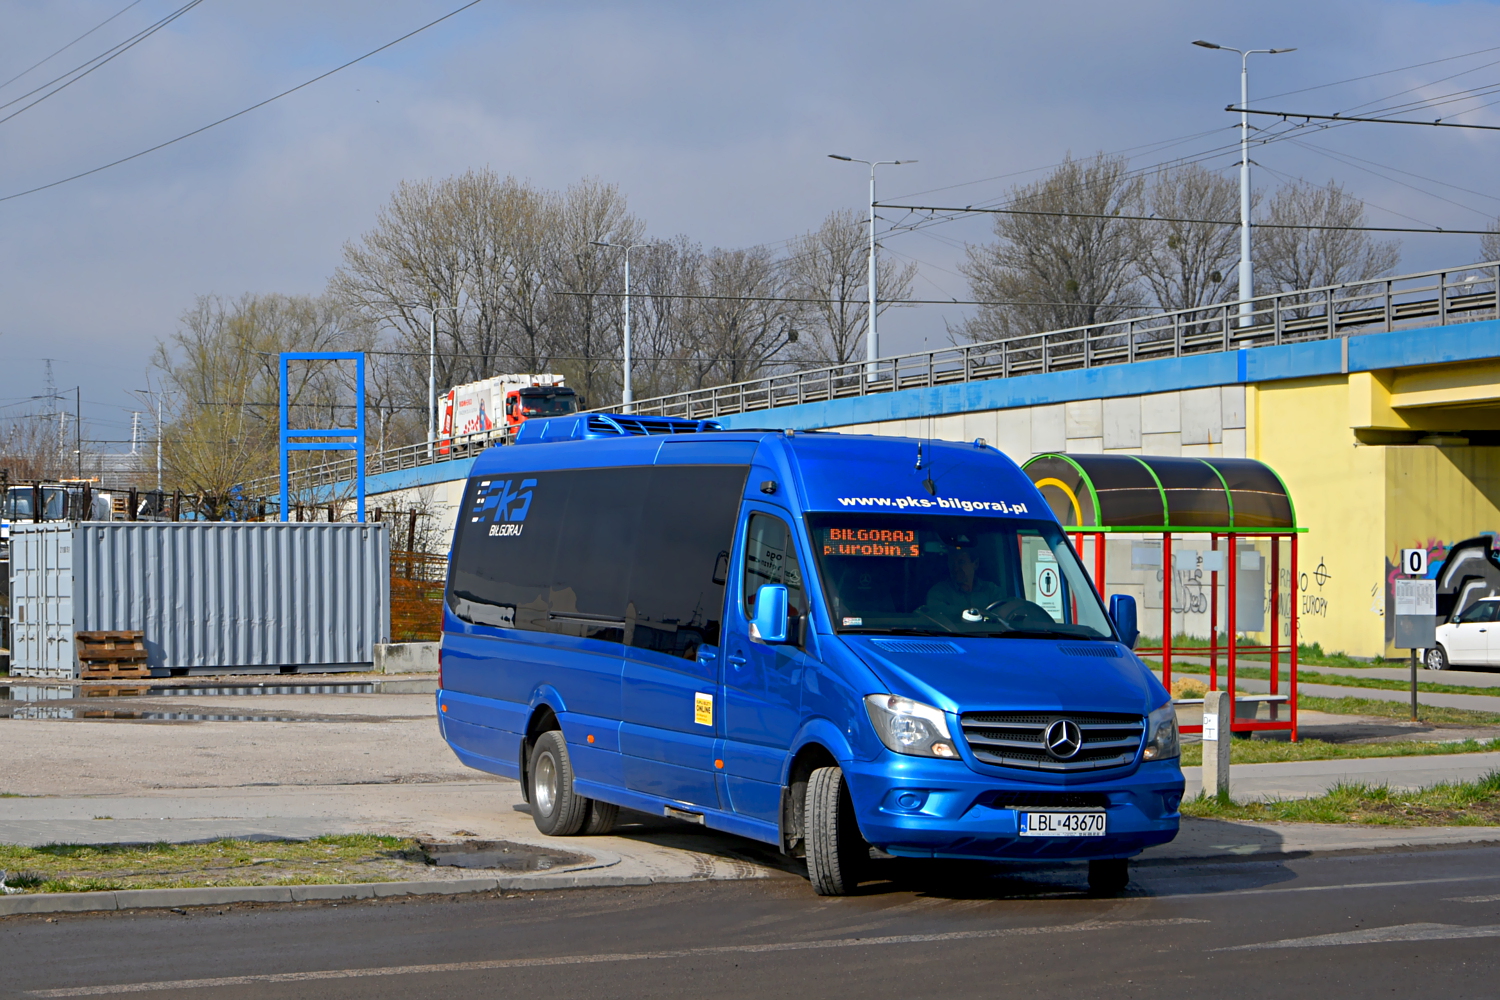 Mercedes-Benz 516 CDI / CUBY Tourist Line #LBL 43670